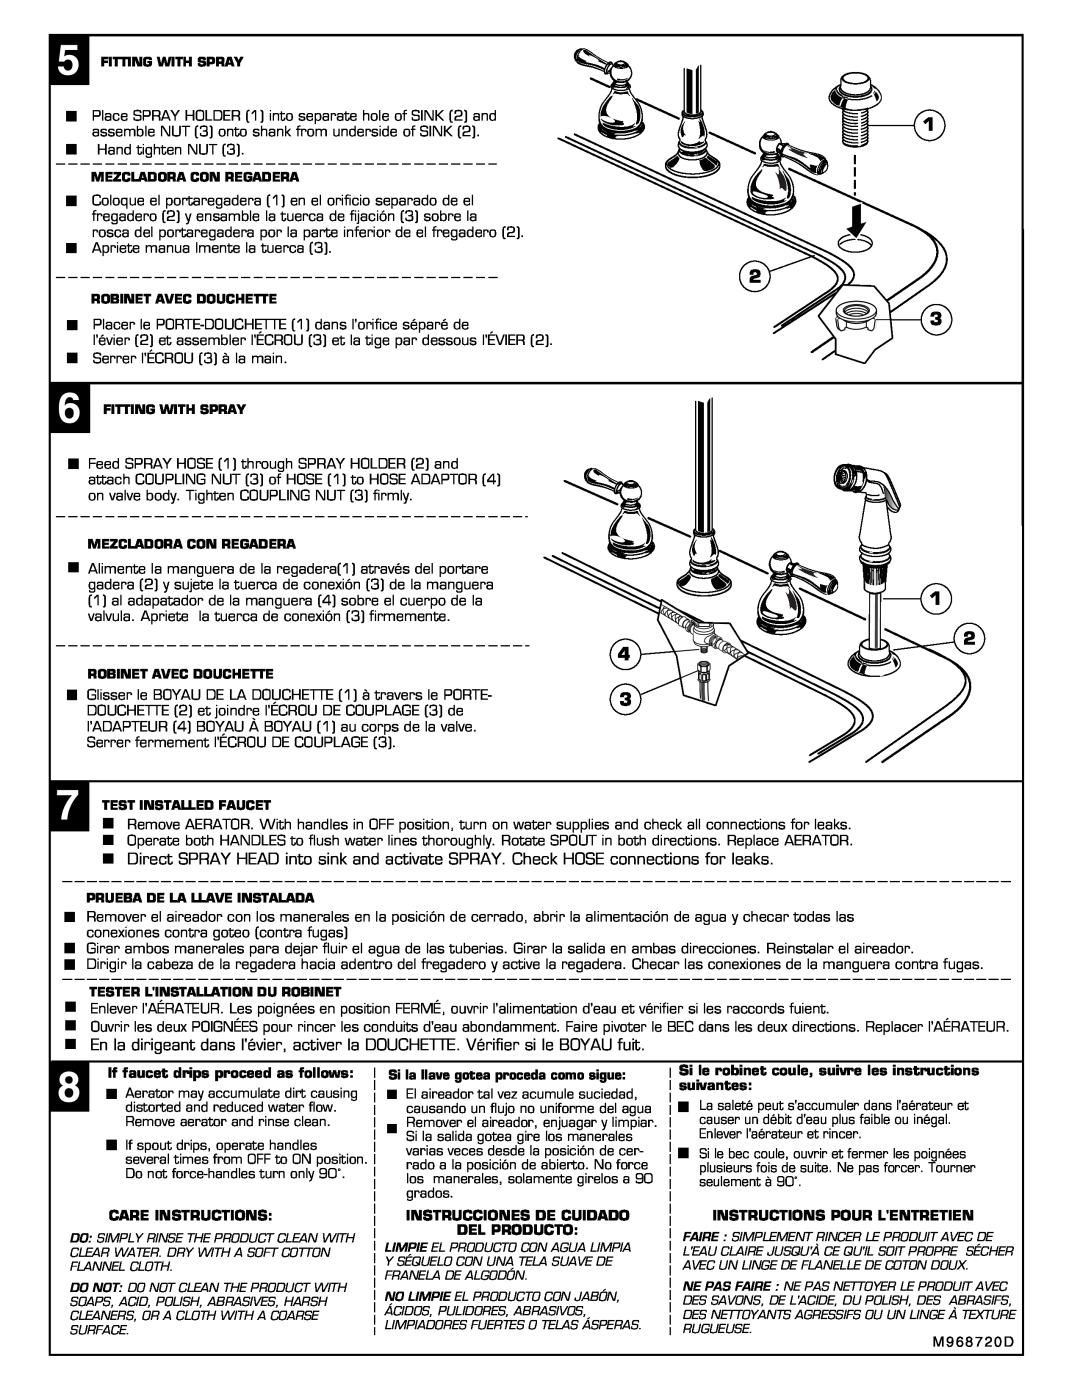 American Standard 4751 Series If faucet drips proceed as follows, Care Instructions, Instrucciones De Cuidado Del Producto 